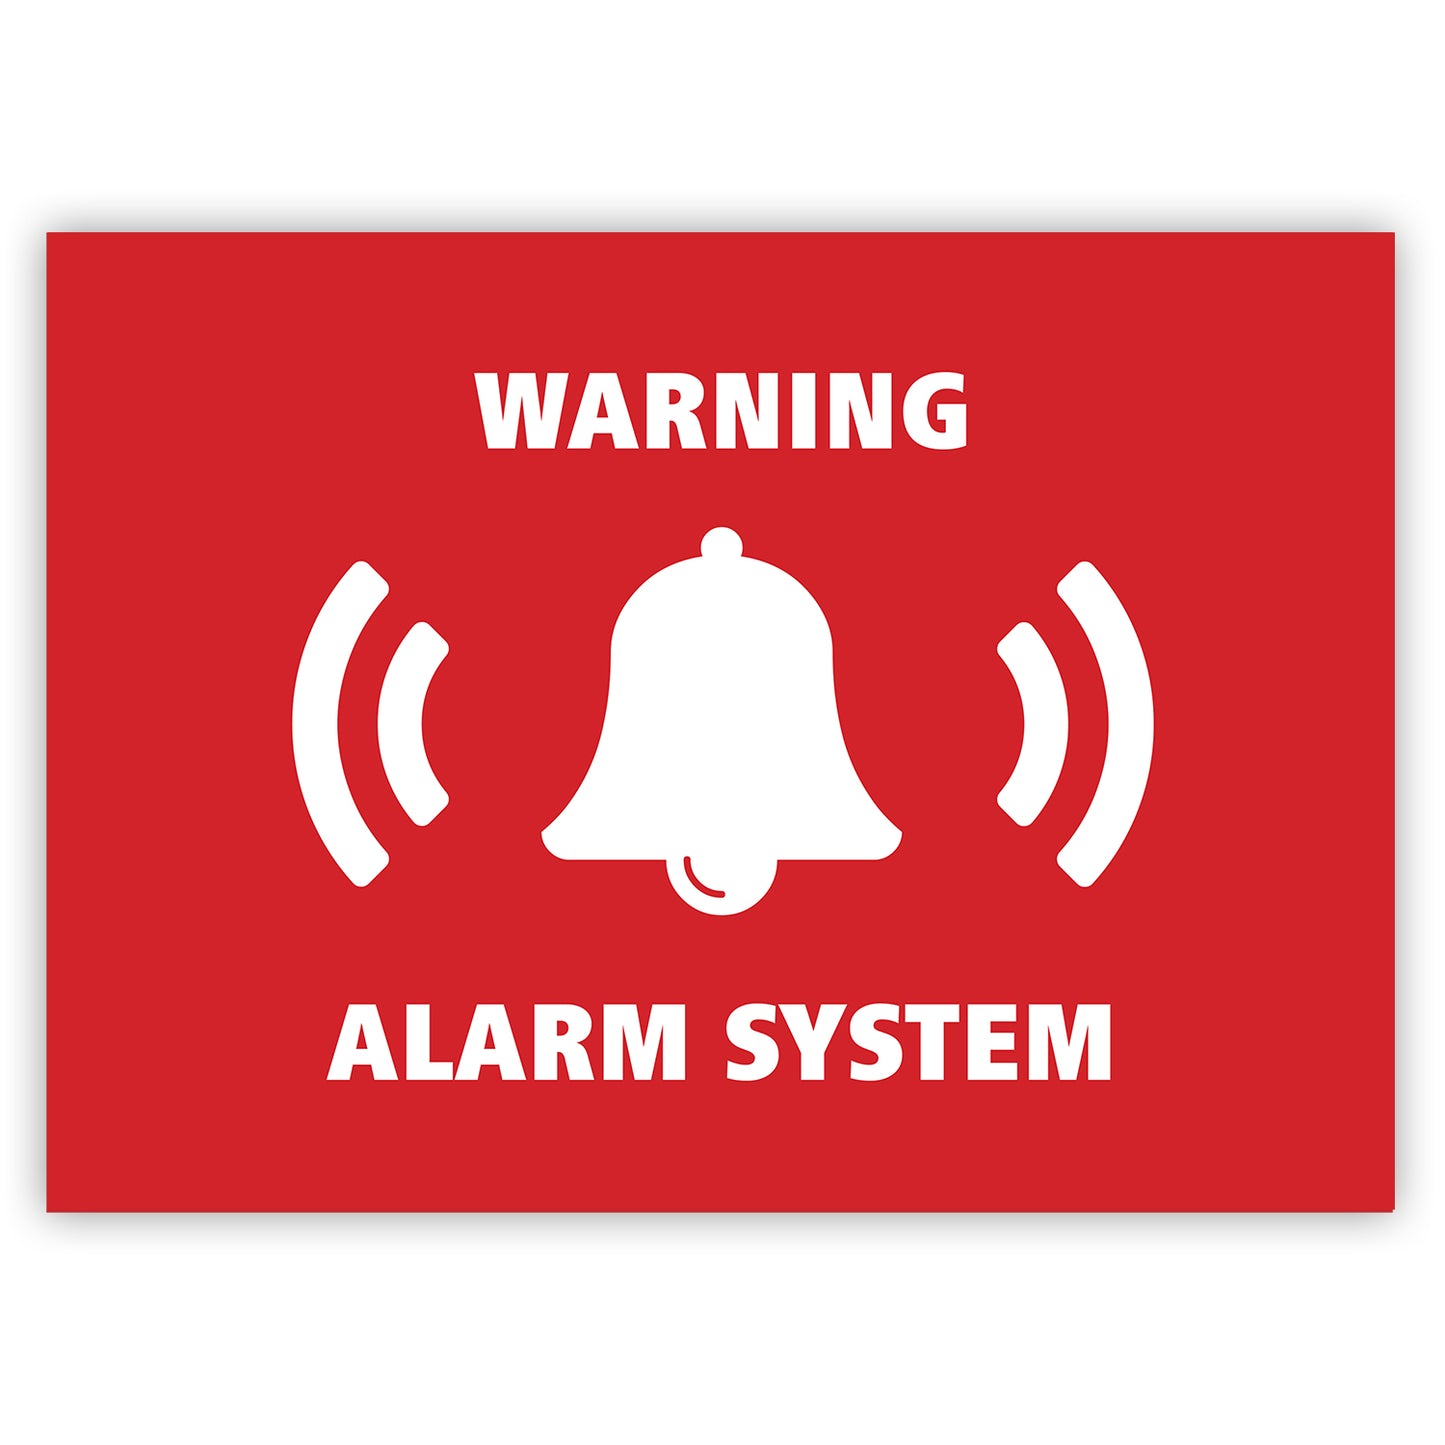 Warning Alarm System Sticker by Gobrecht & Ulrich